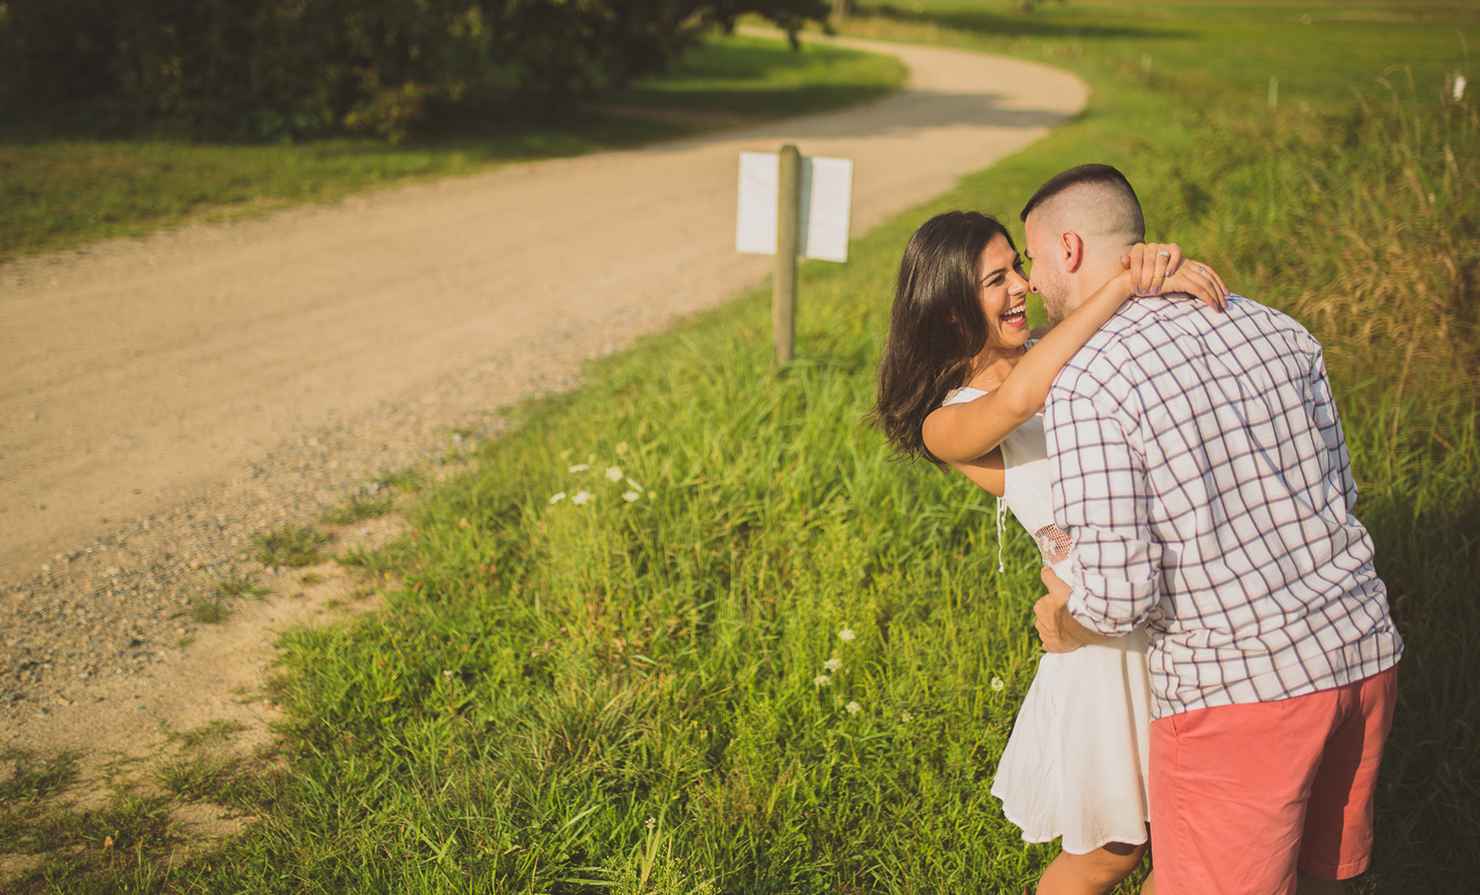 Outdoor summer wedding photo session ideas